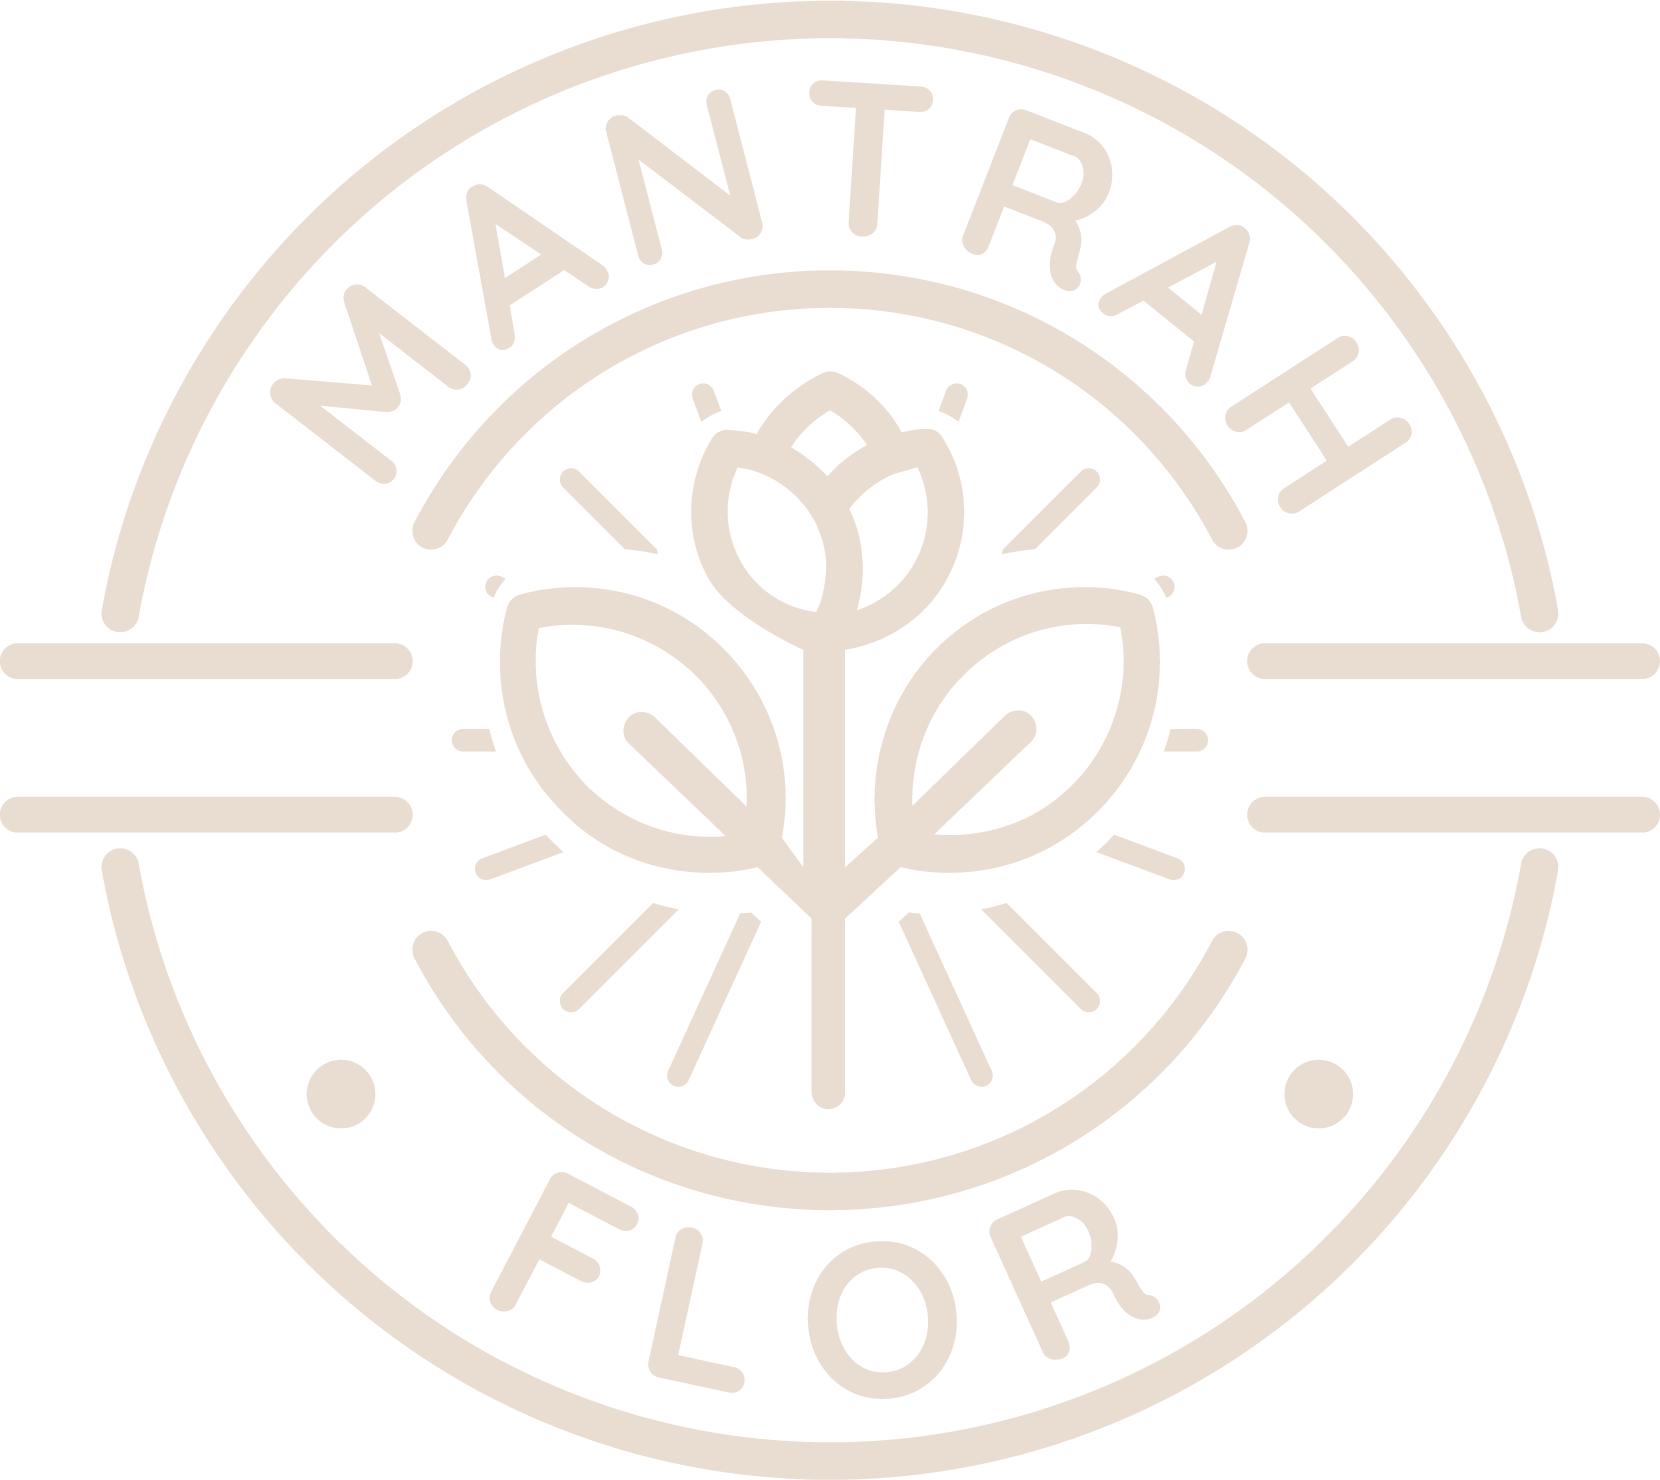 Mantrah Flor